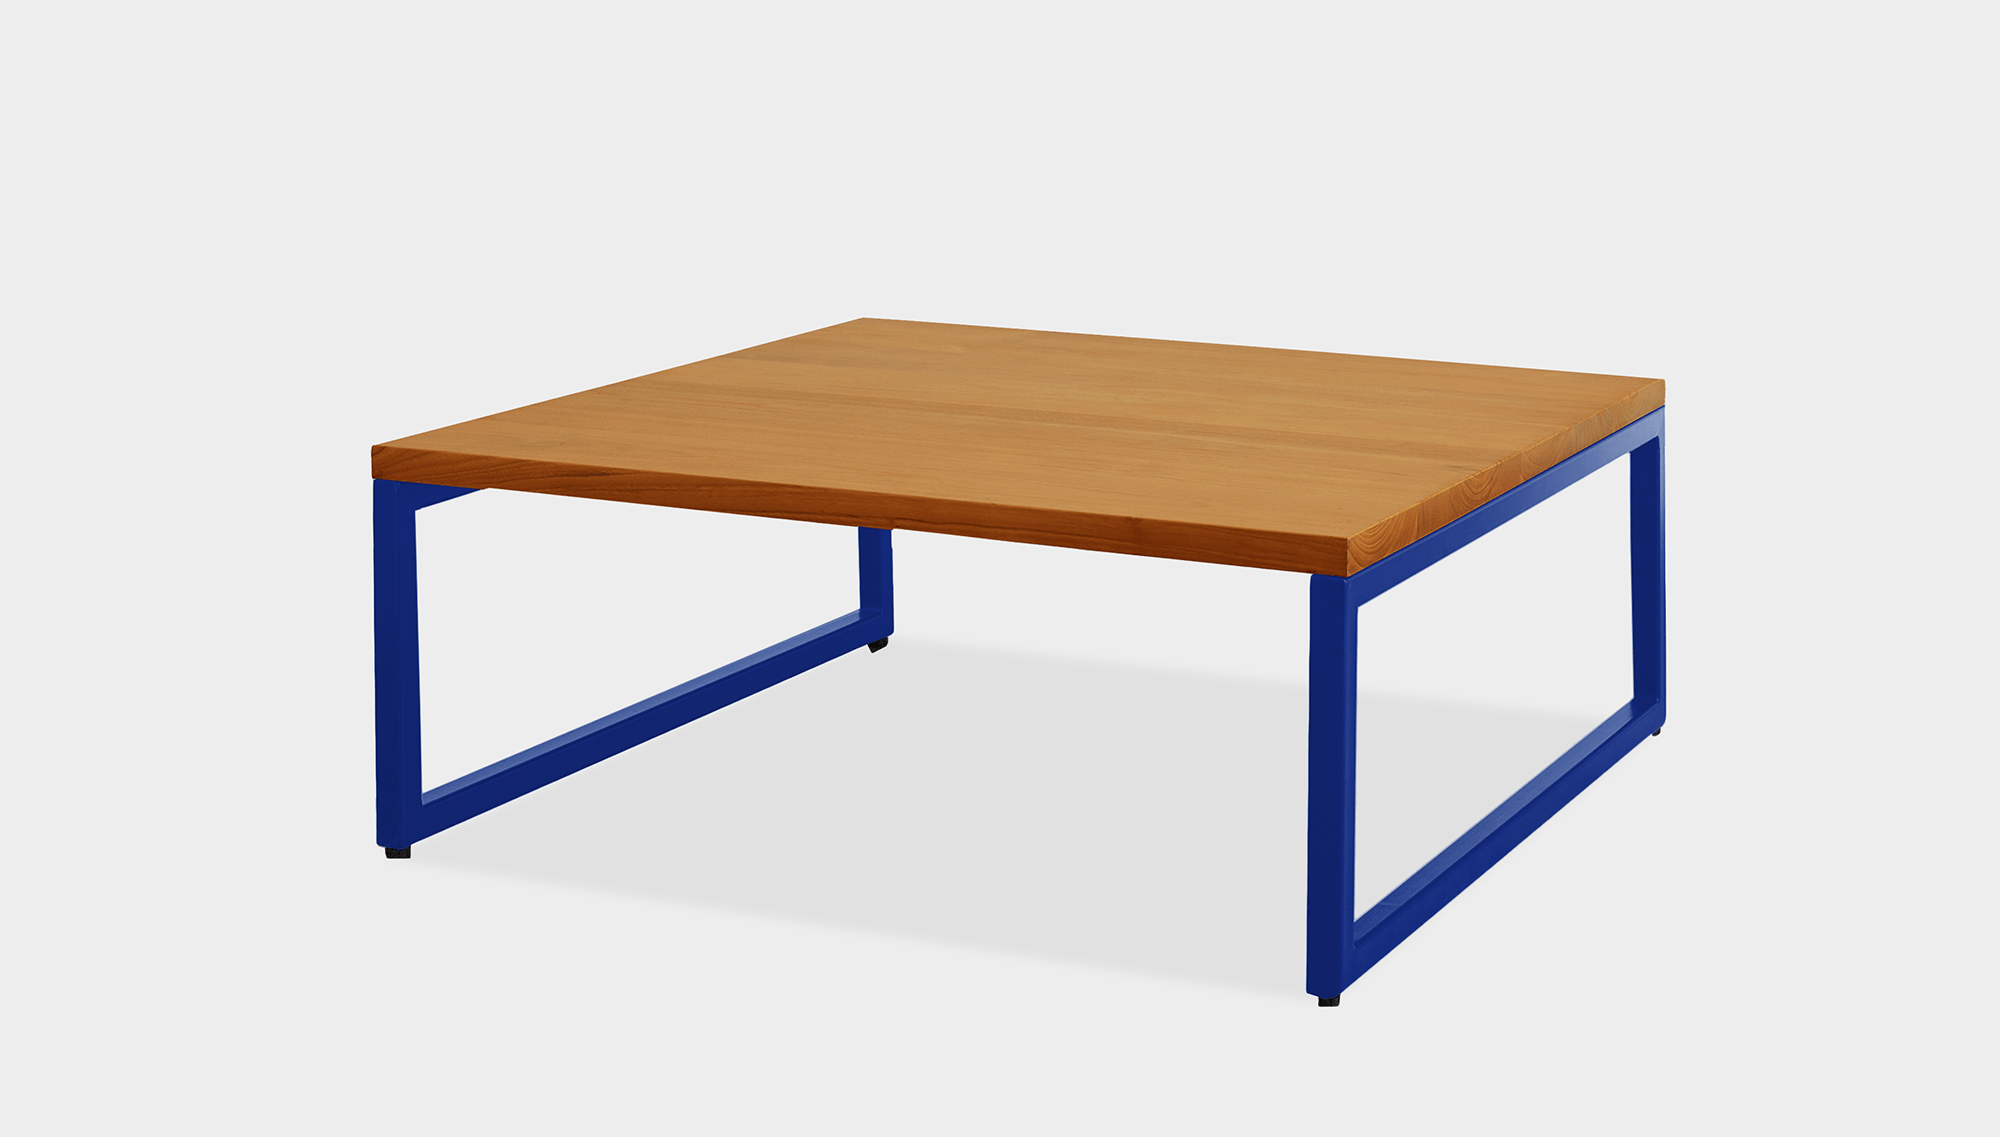 reddie-raw square coffee table 90 x 90 x 35H *cm / Wood Teak~Natural / Metal~Navy Suzy Coffee Table Square